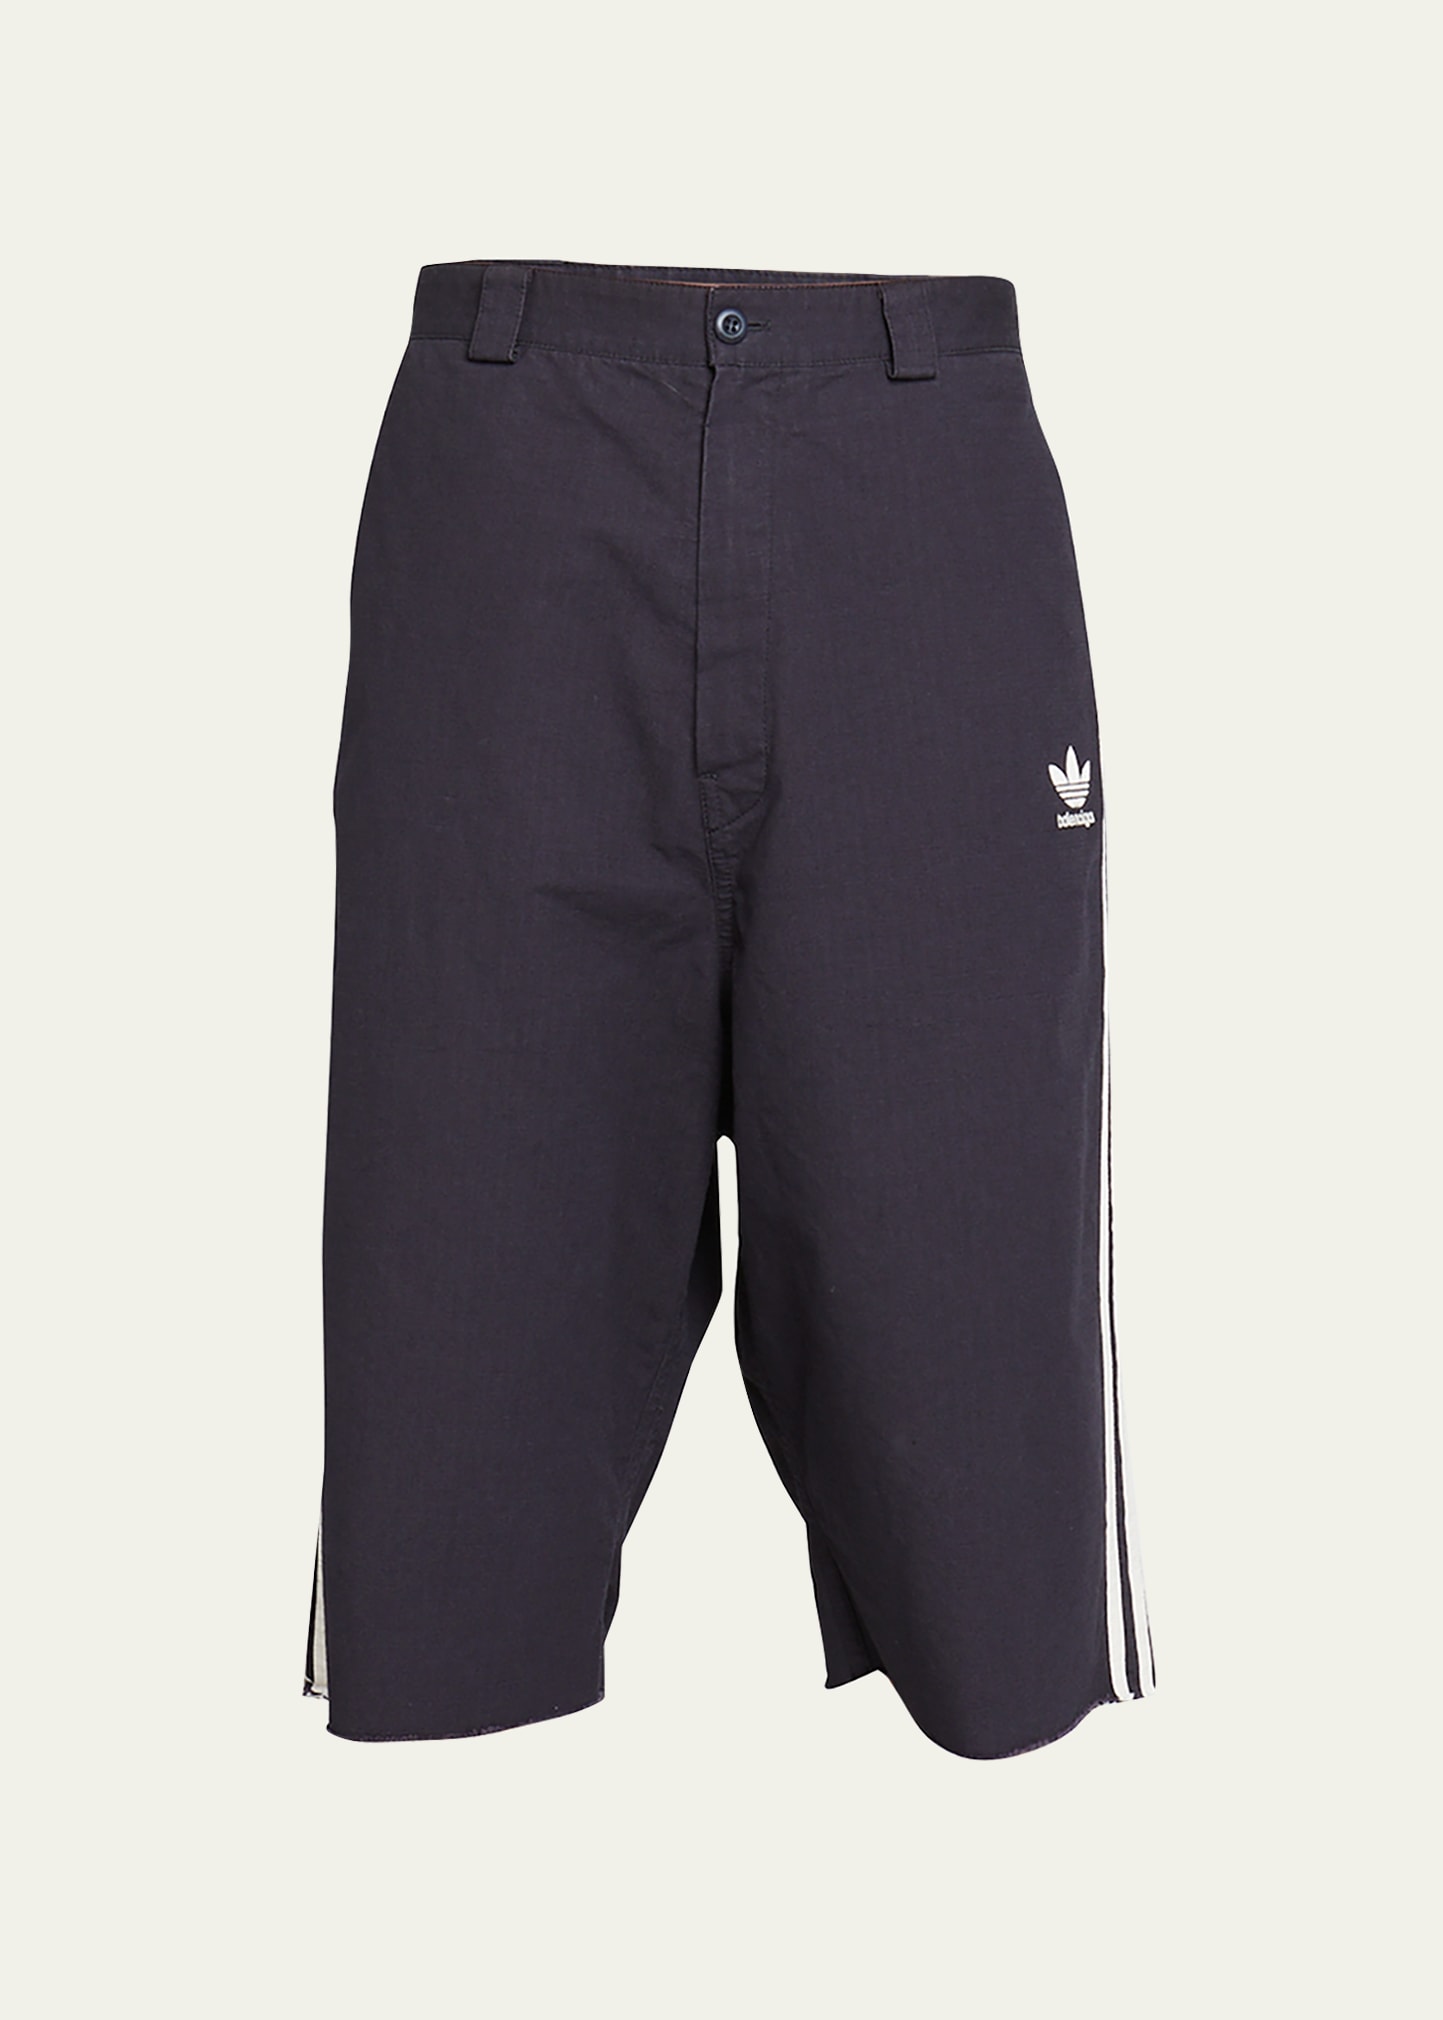 x Adidas Men's 3-Stripes Ripstop Shorts